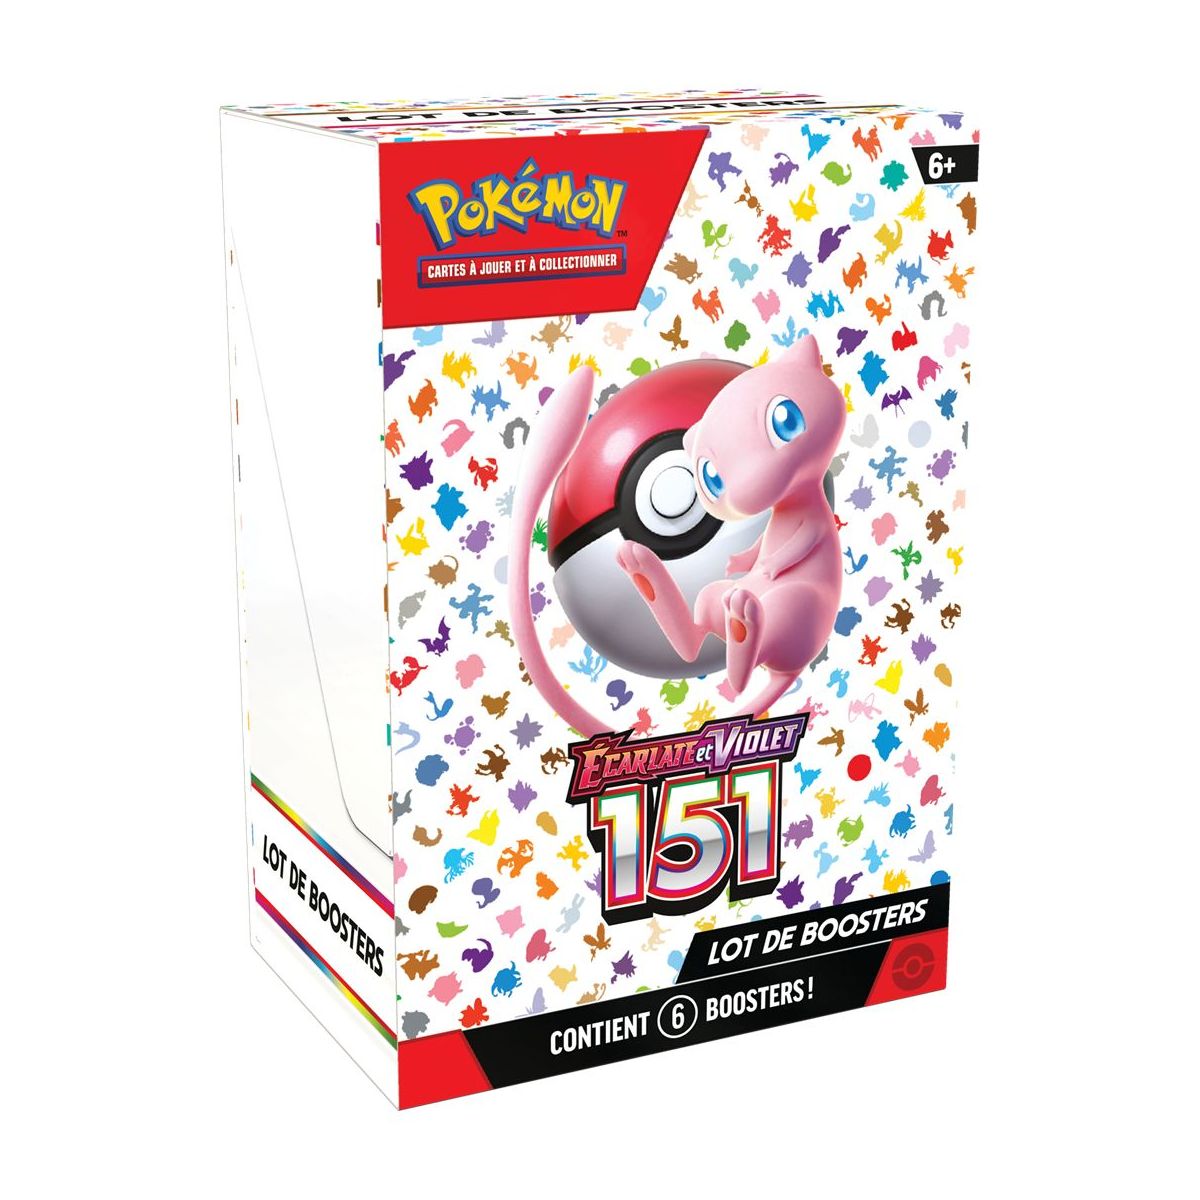 Pokémon - Bundle Box 6 Boosters - Scarlet and Purple - 151 -[SV03.5 - EV03.5] - FR